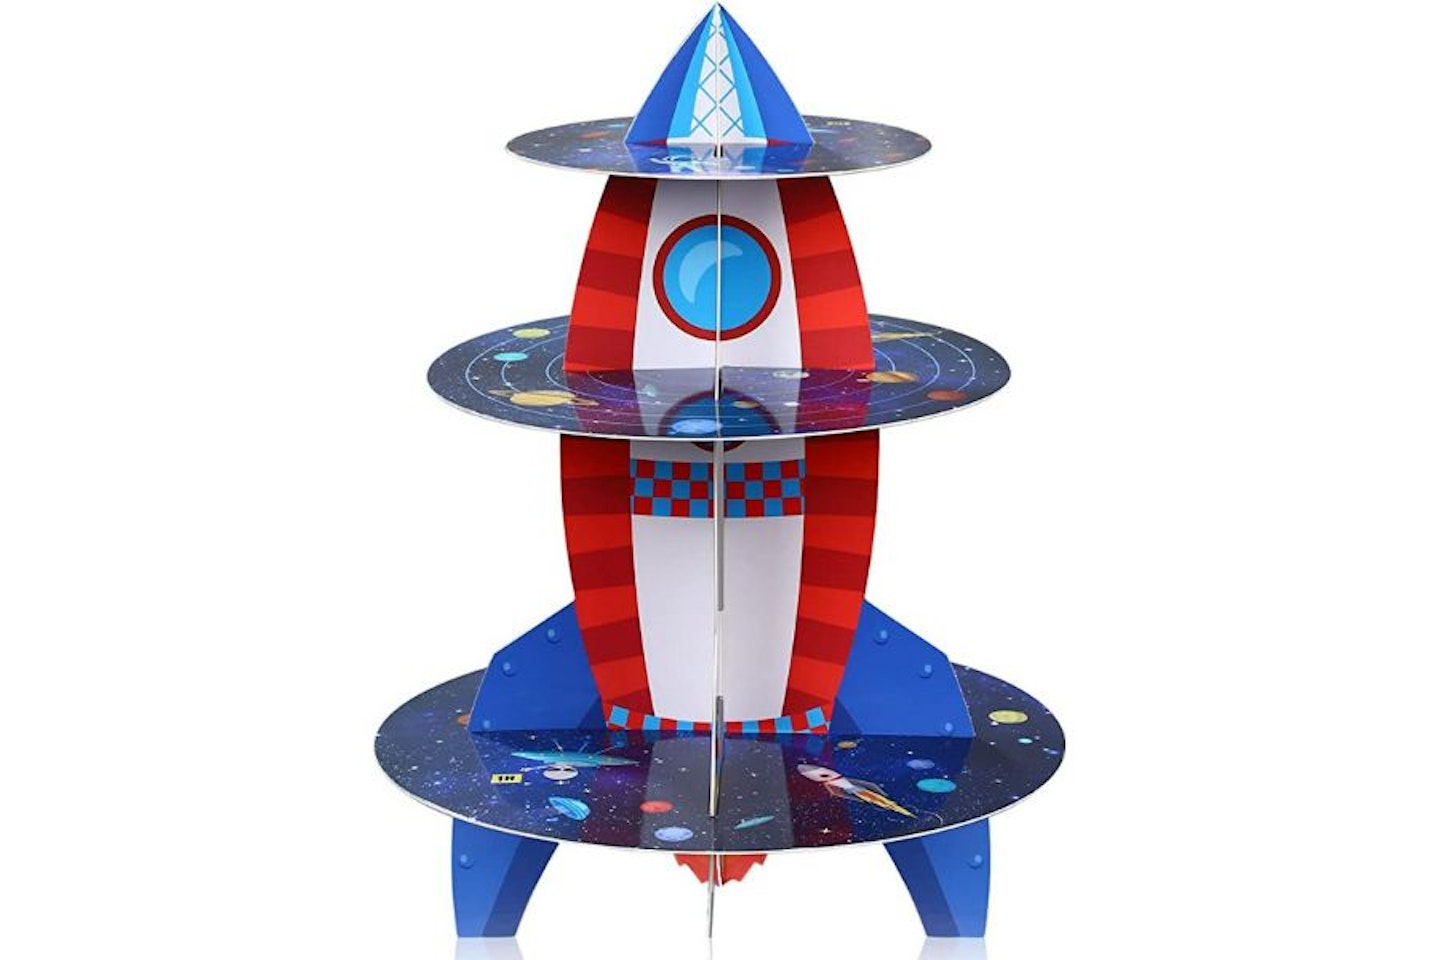 Space party ideas - Neunen 3 Tiers Rocket Cupcake Stand